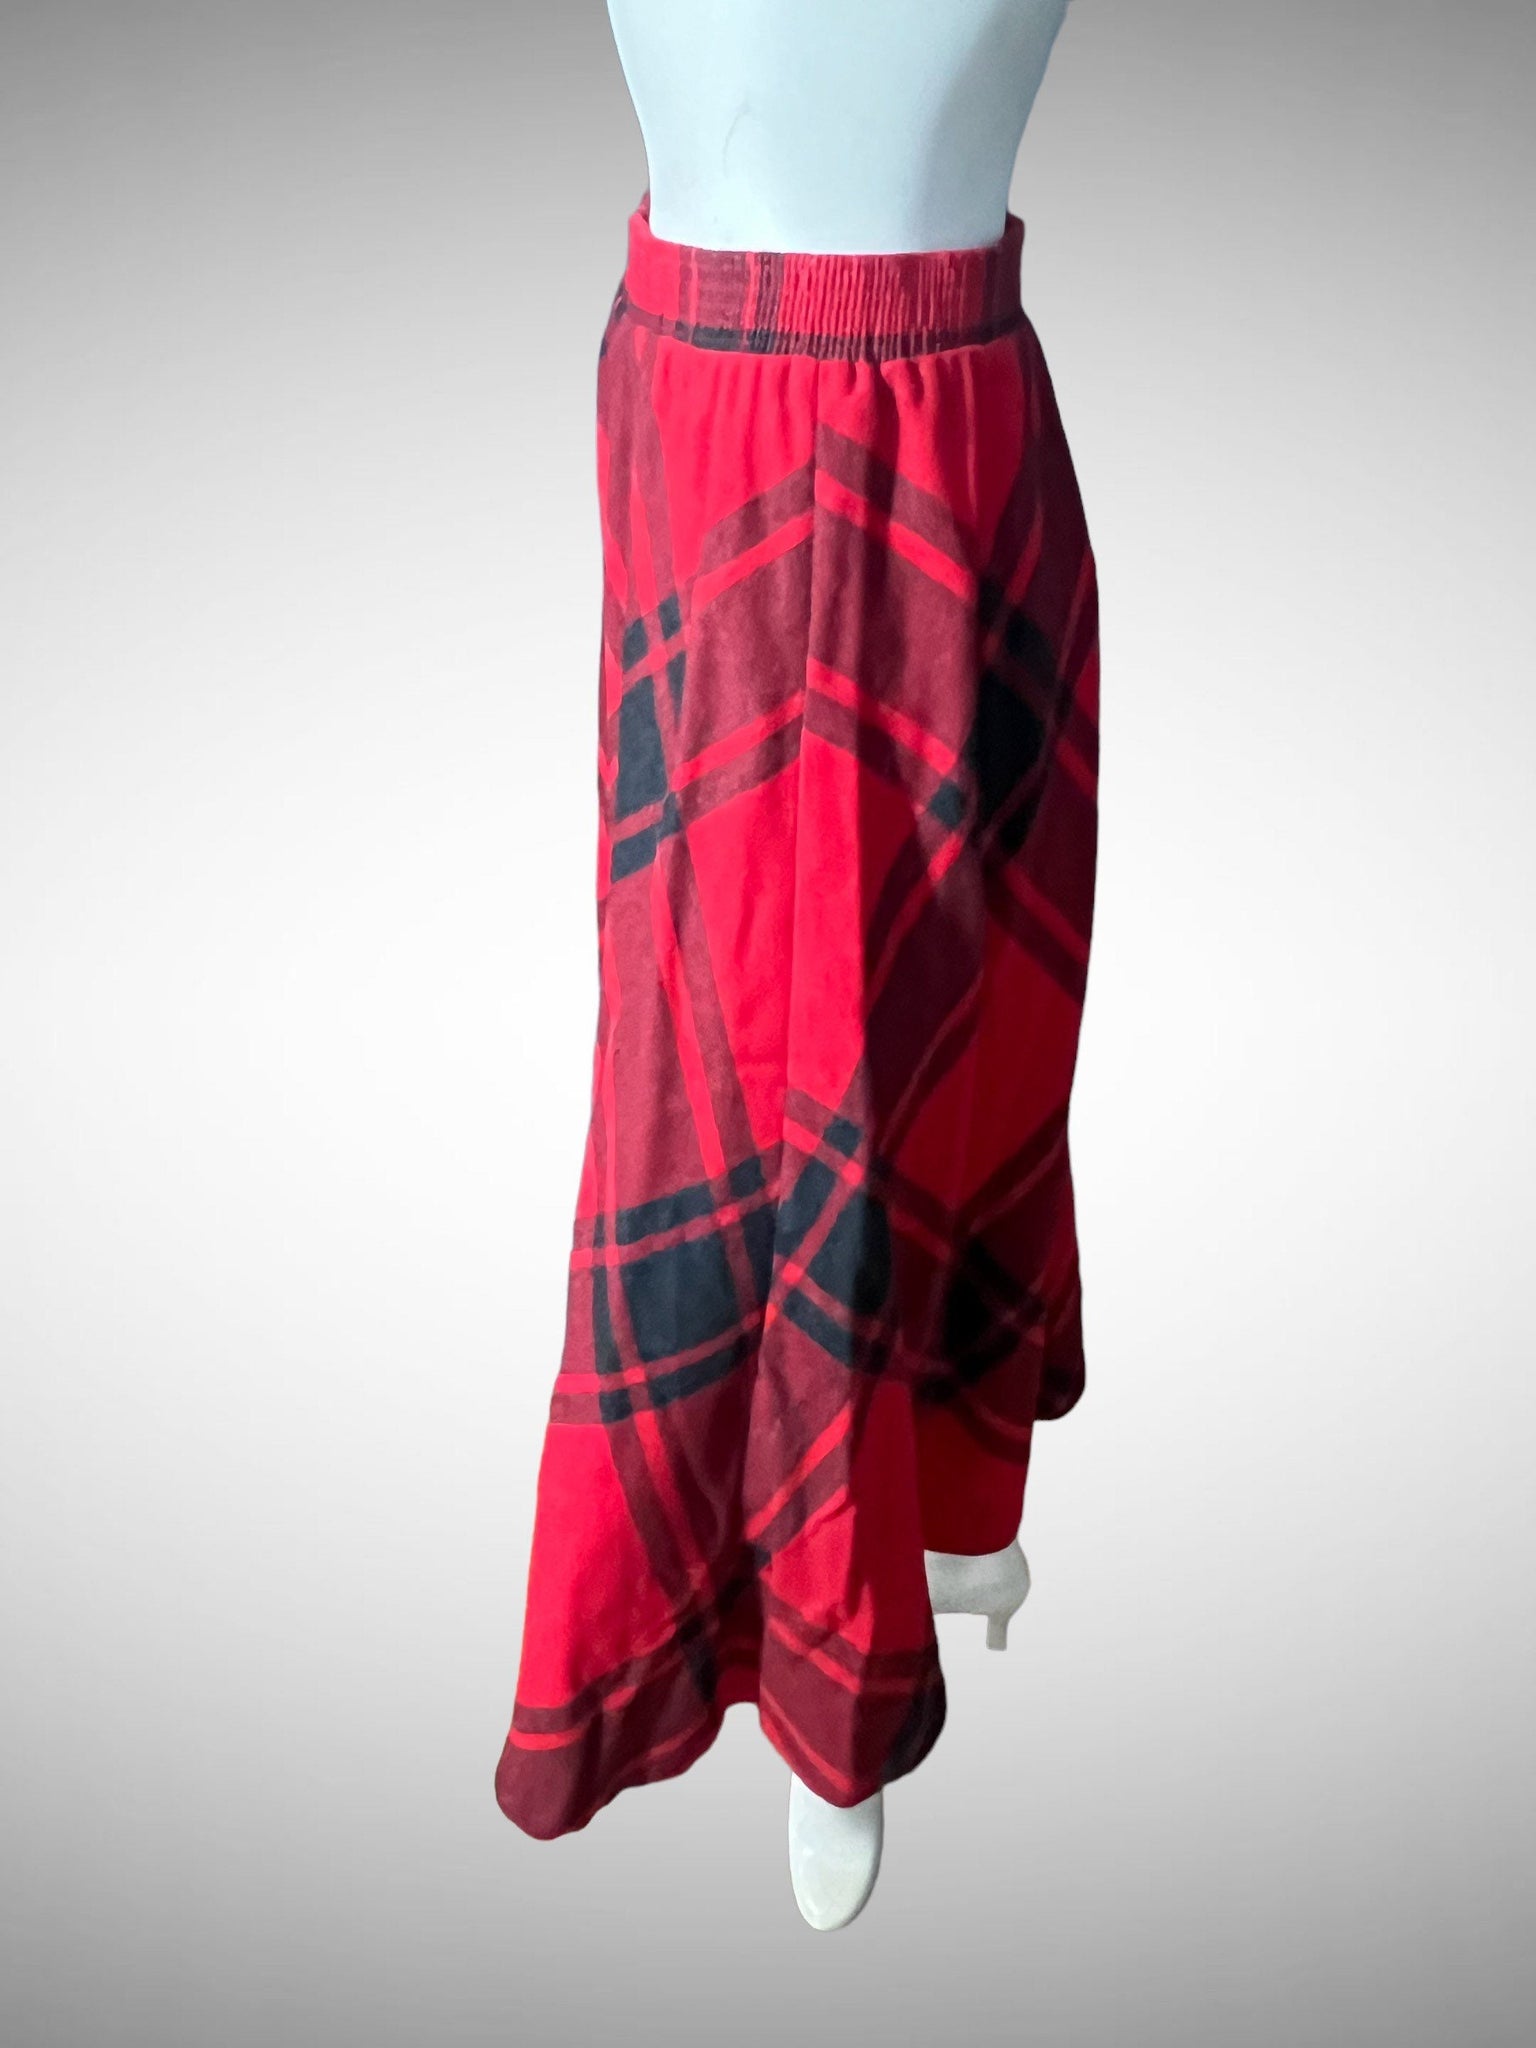 Vintage 80's red plaid full circle skirt M